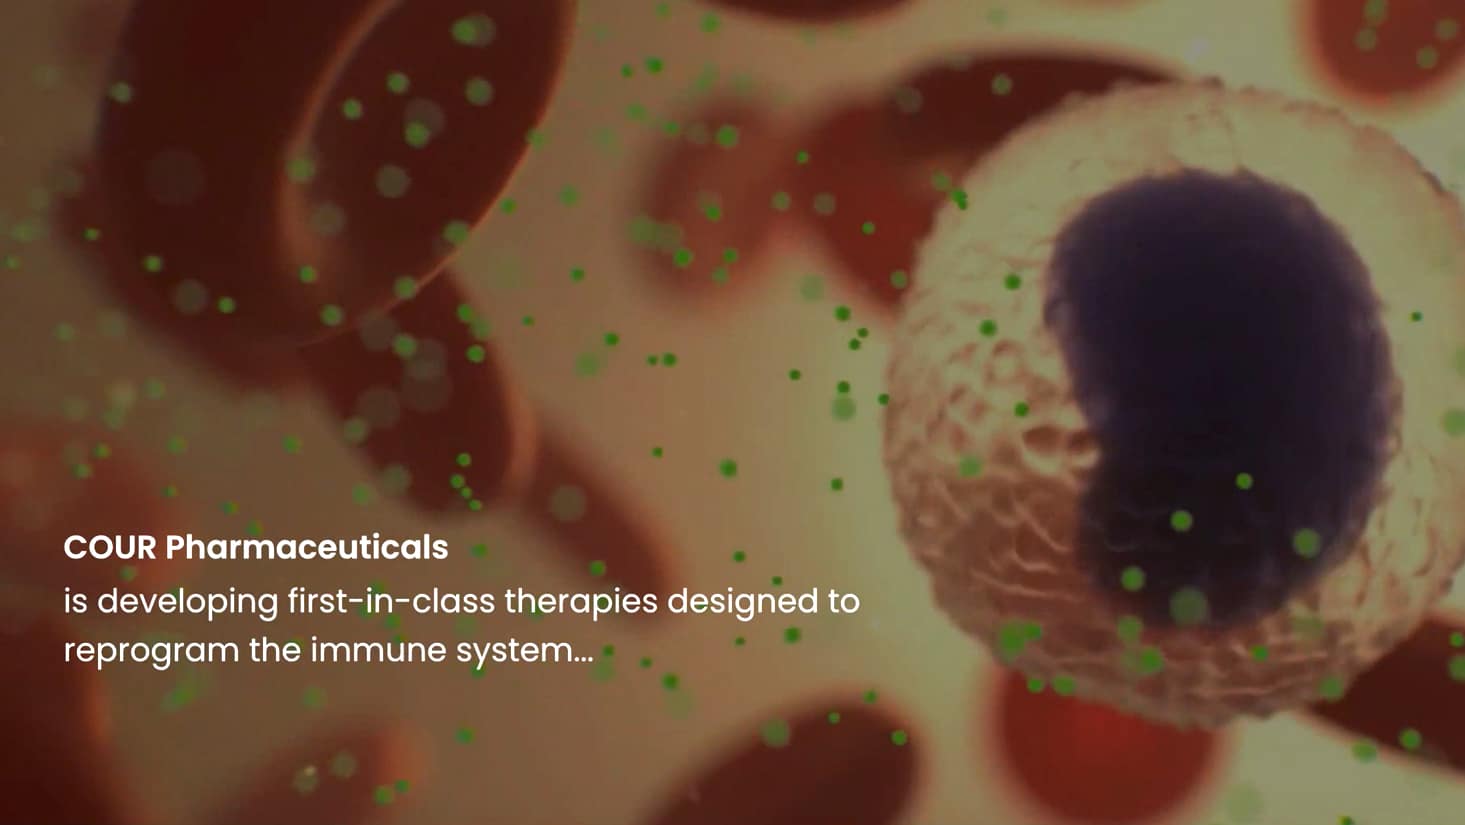 COUR Pharmaceuticals biotech website animation graphic image for portfolio